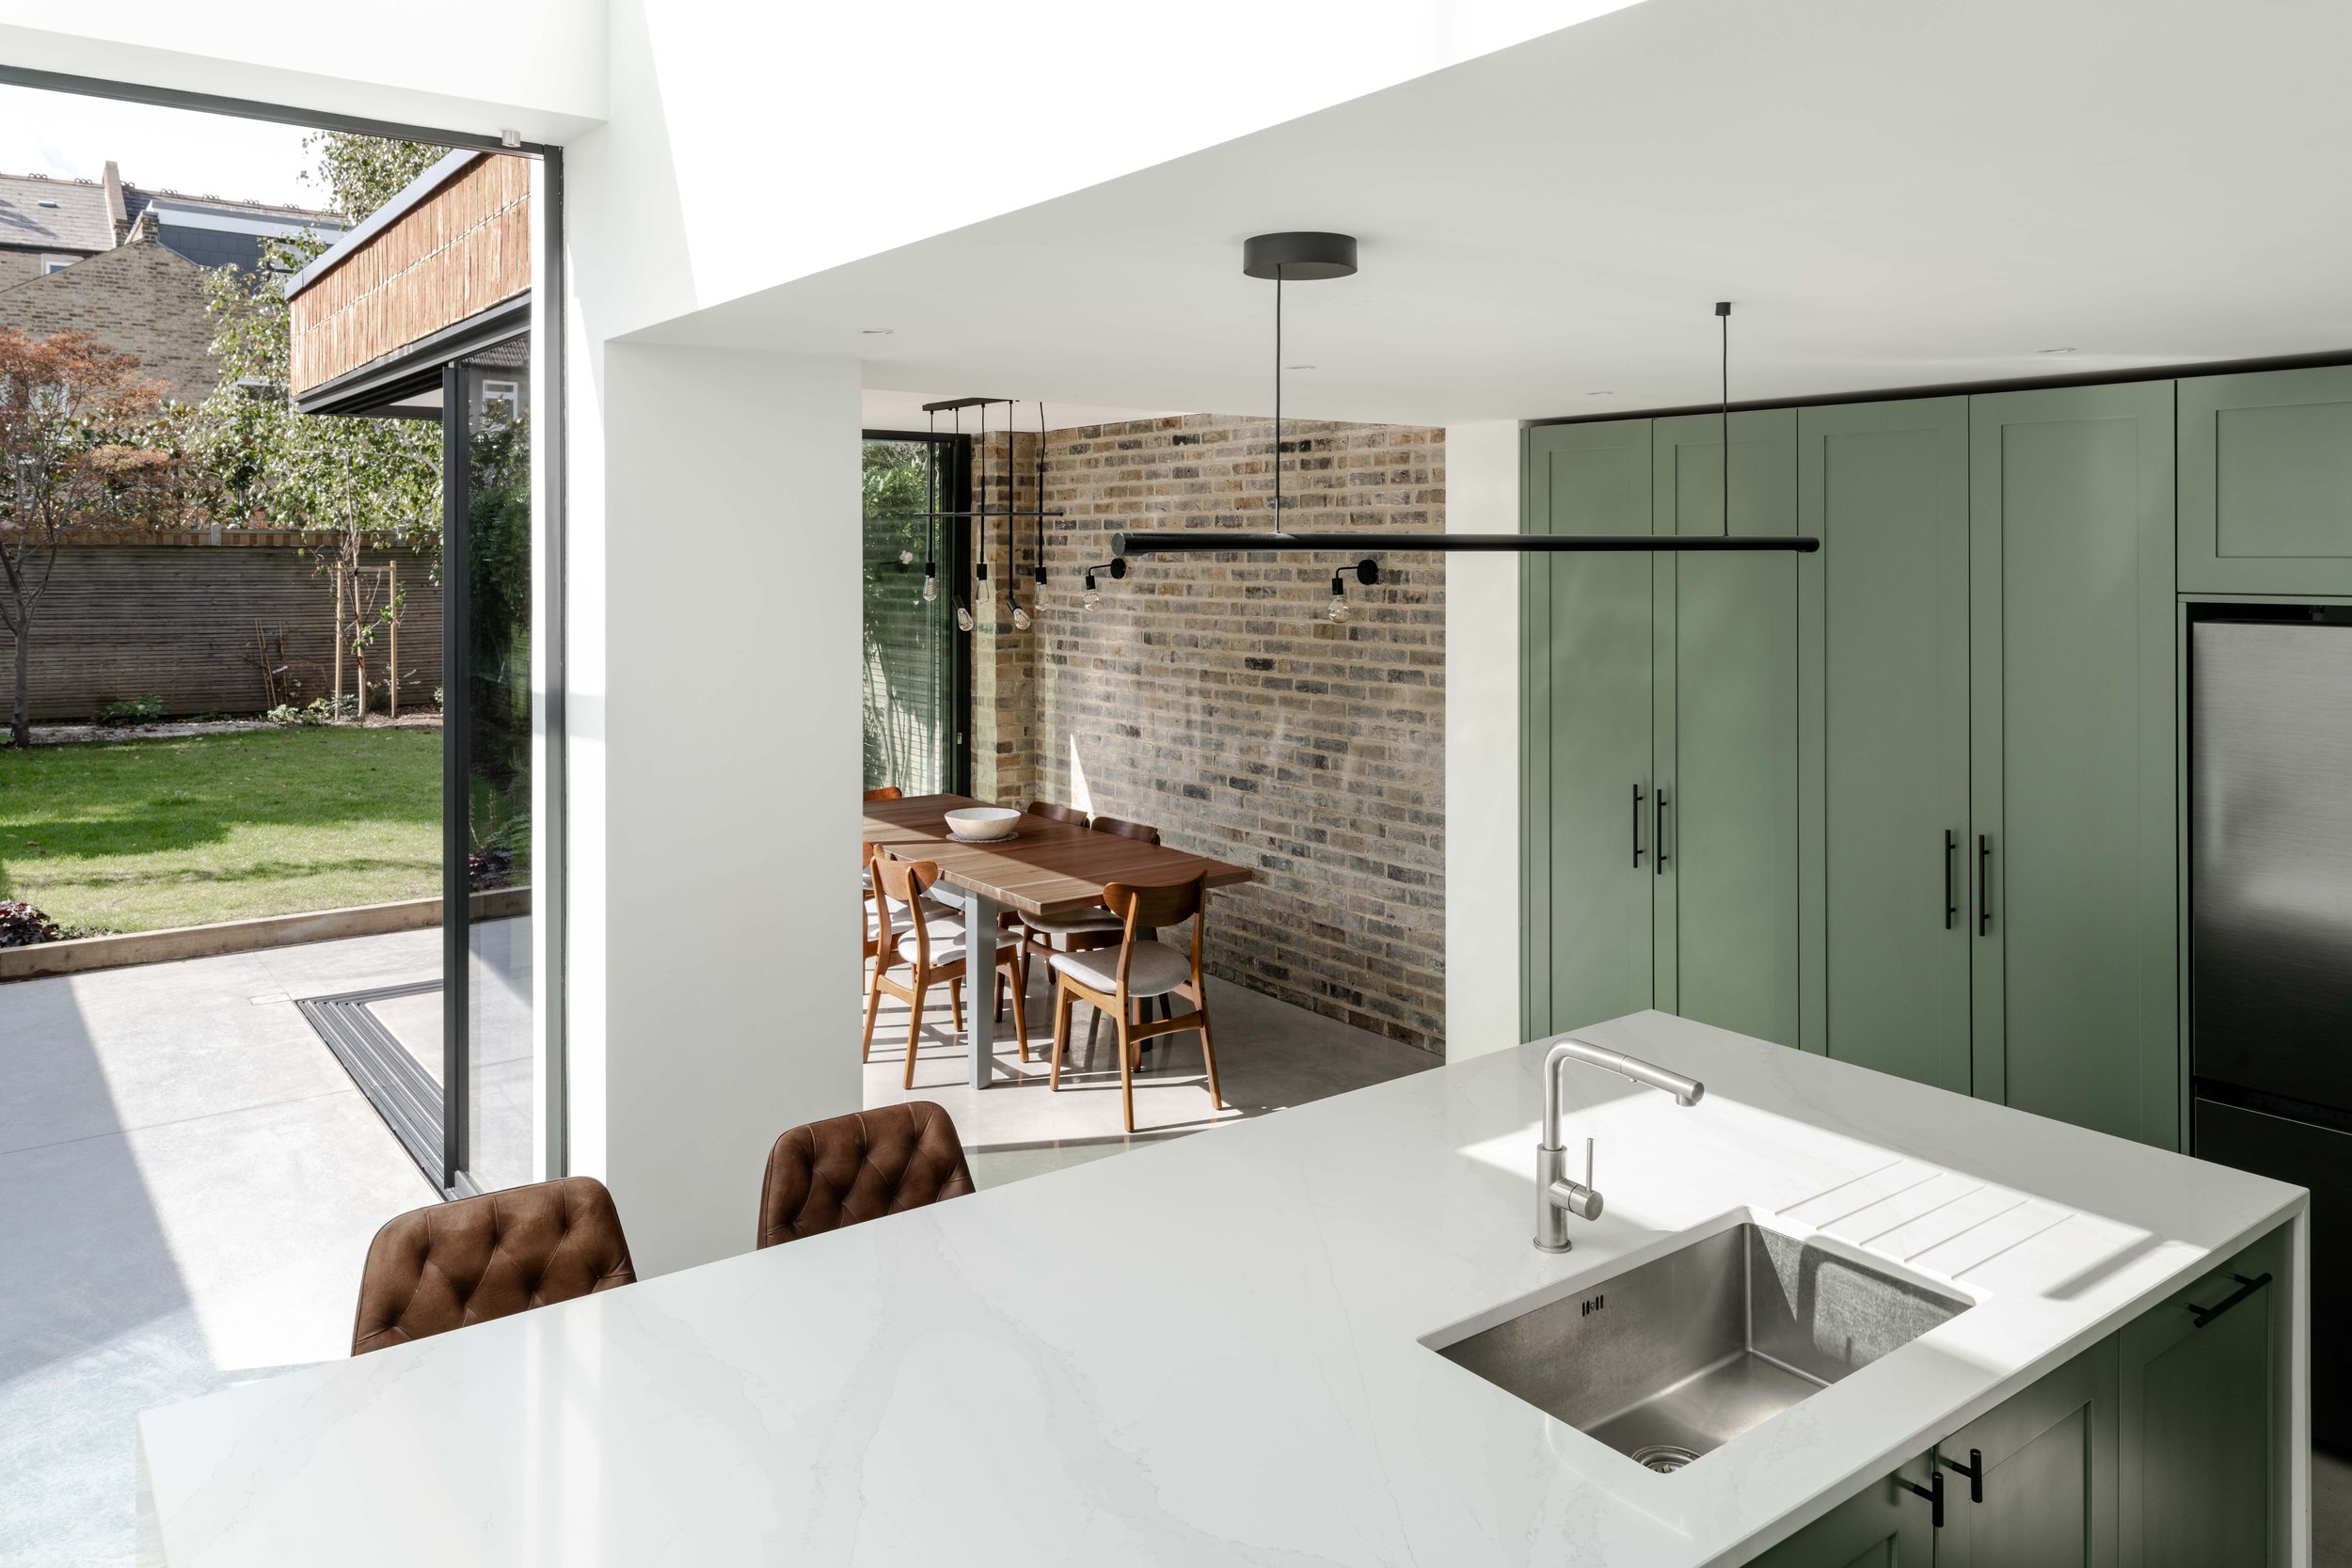 10-dulwich-house-victorian-semi-kitchen-extension-interior-architecture-lambeth-london-uk-rider-stirland-architects.jpg